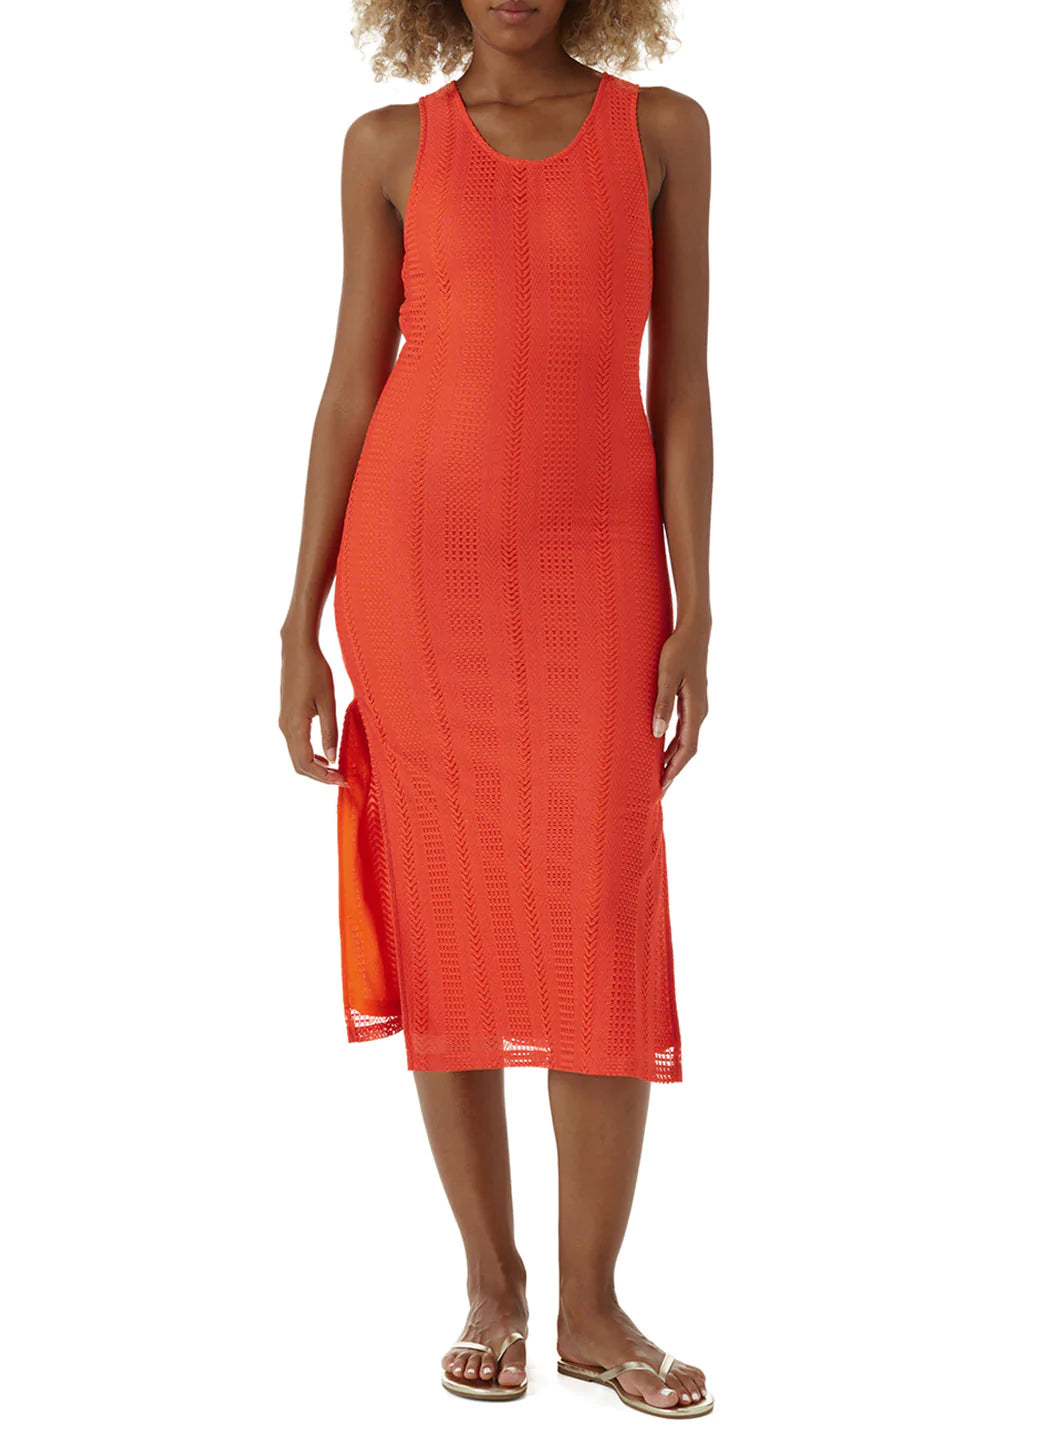 Hailey Apricot Dress Model 2023 F  